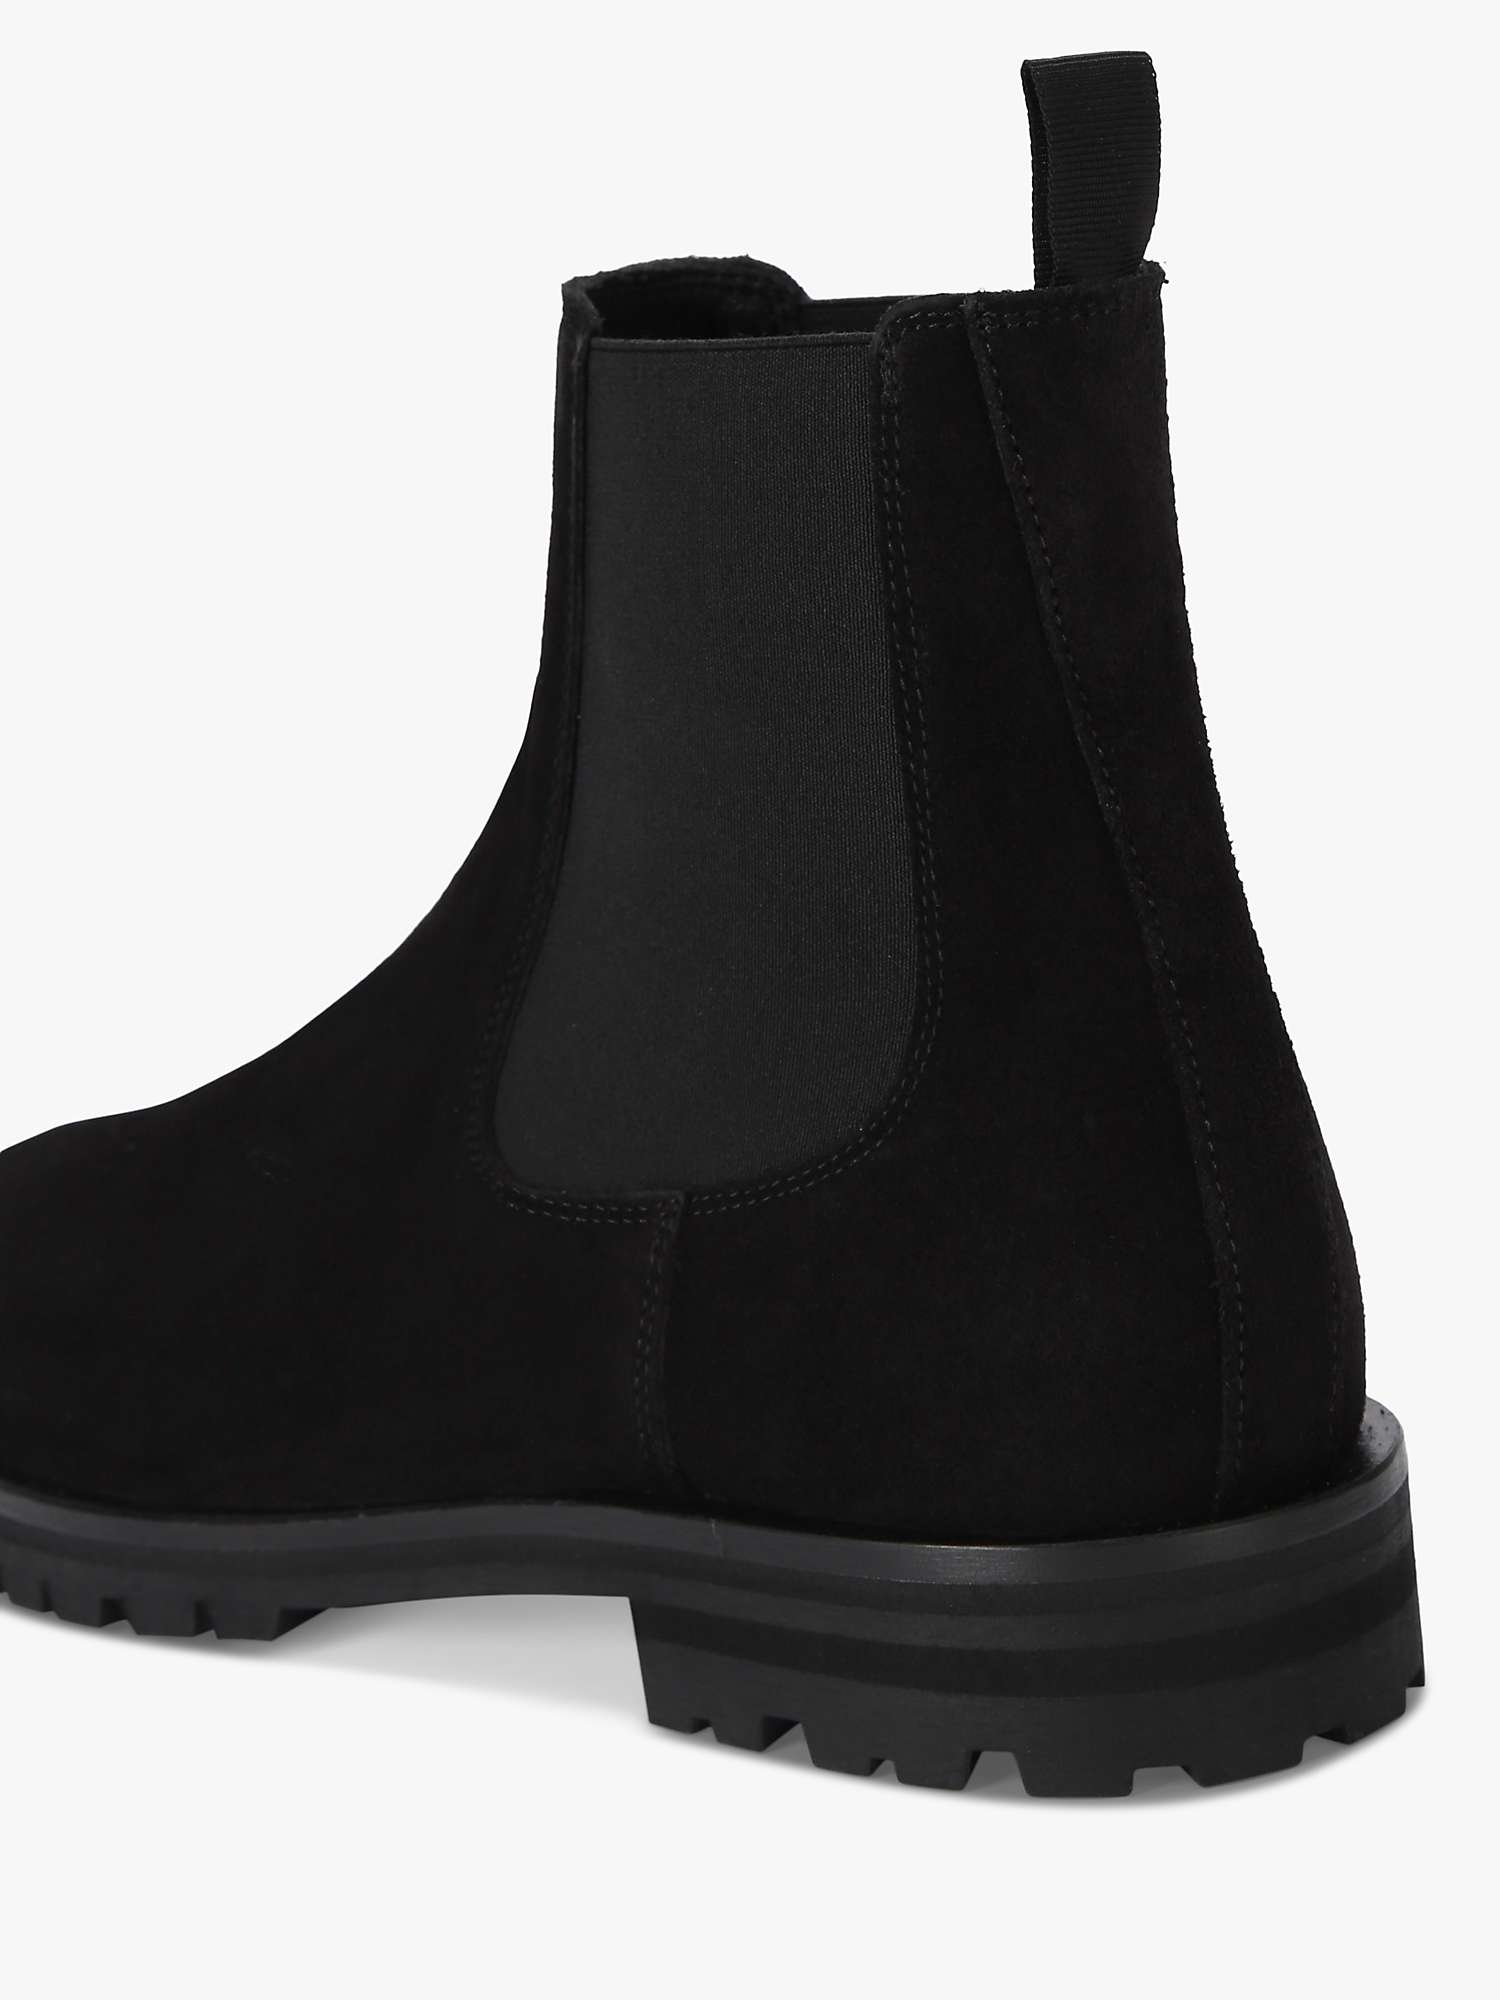 Buy Kurt Geiger London Hunt Chelsea Boots, Black Online at johnlewis.com